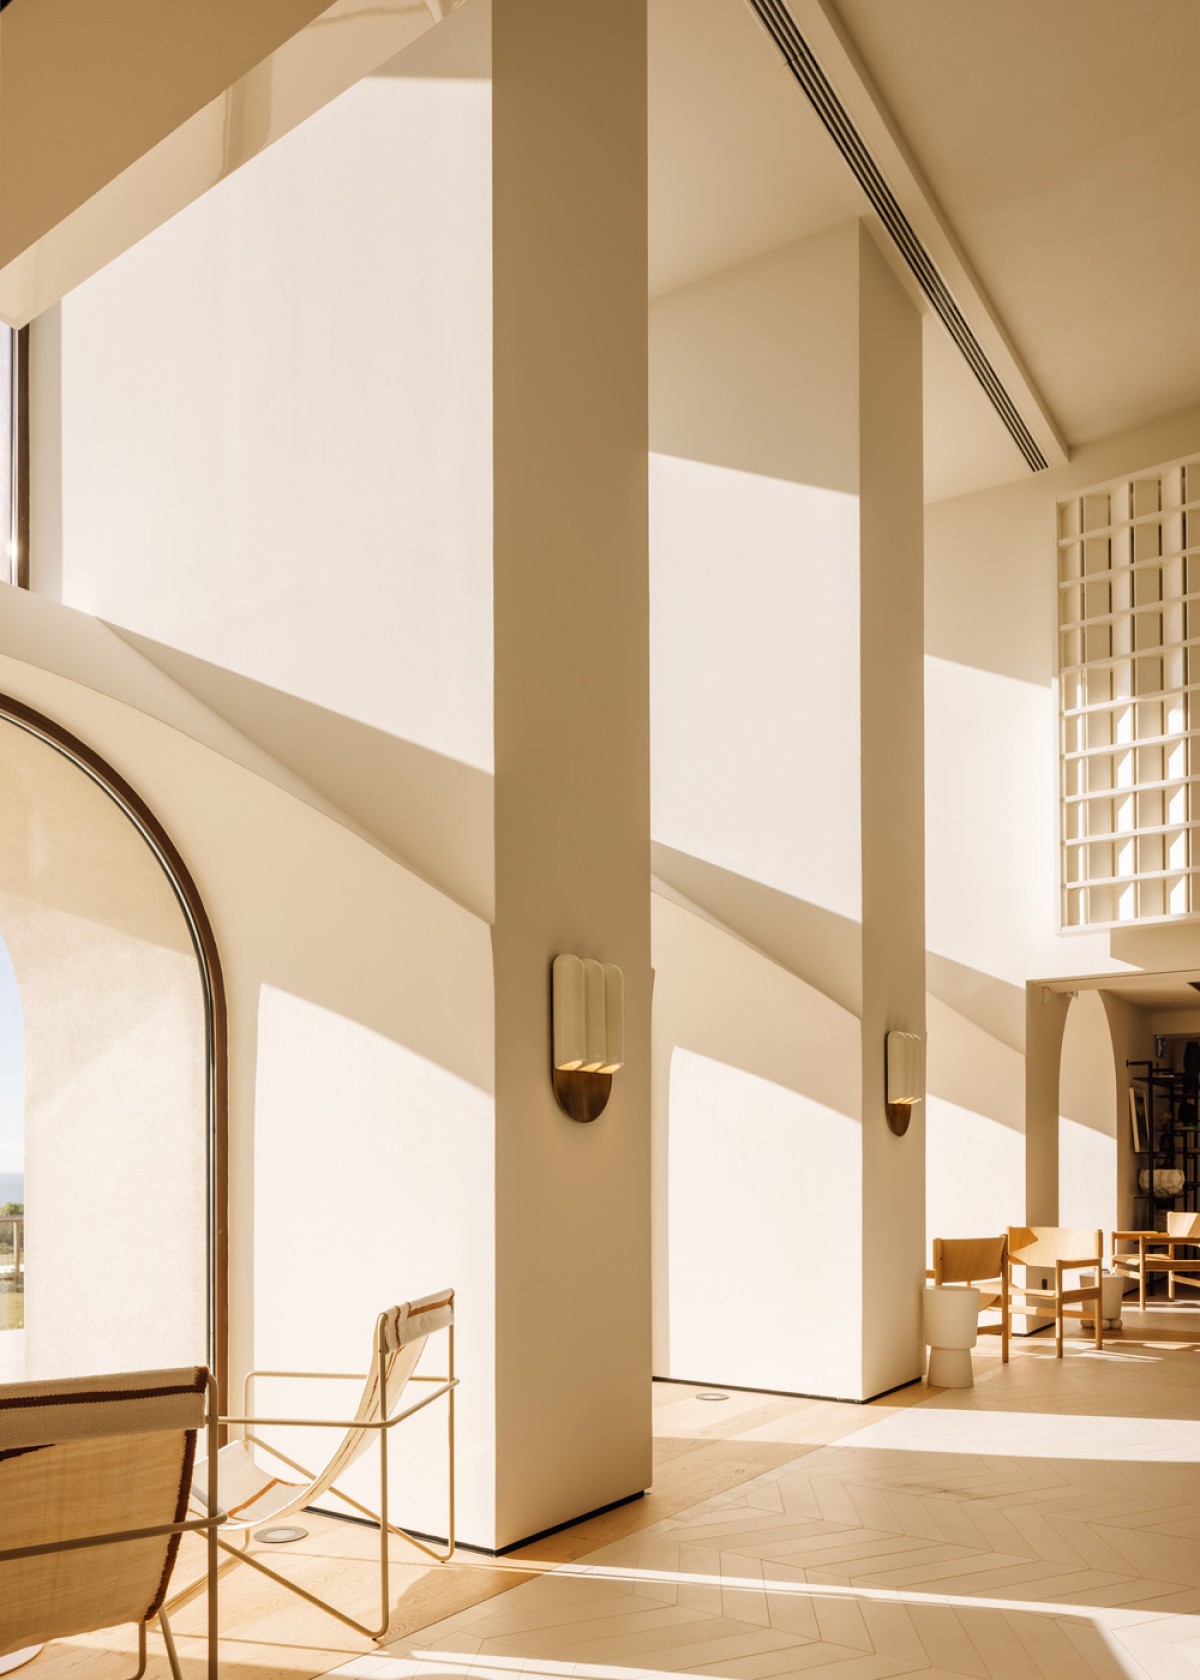 Interior view of Aethos Ericeira Hotel by Pedra Silva Arquitectos